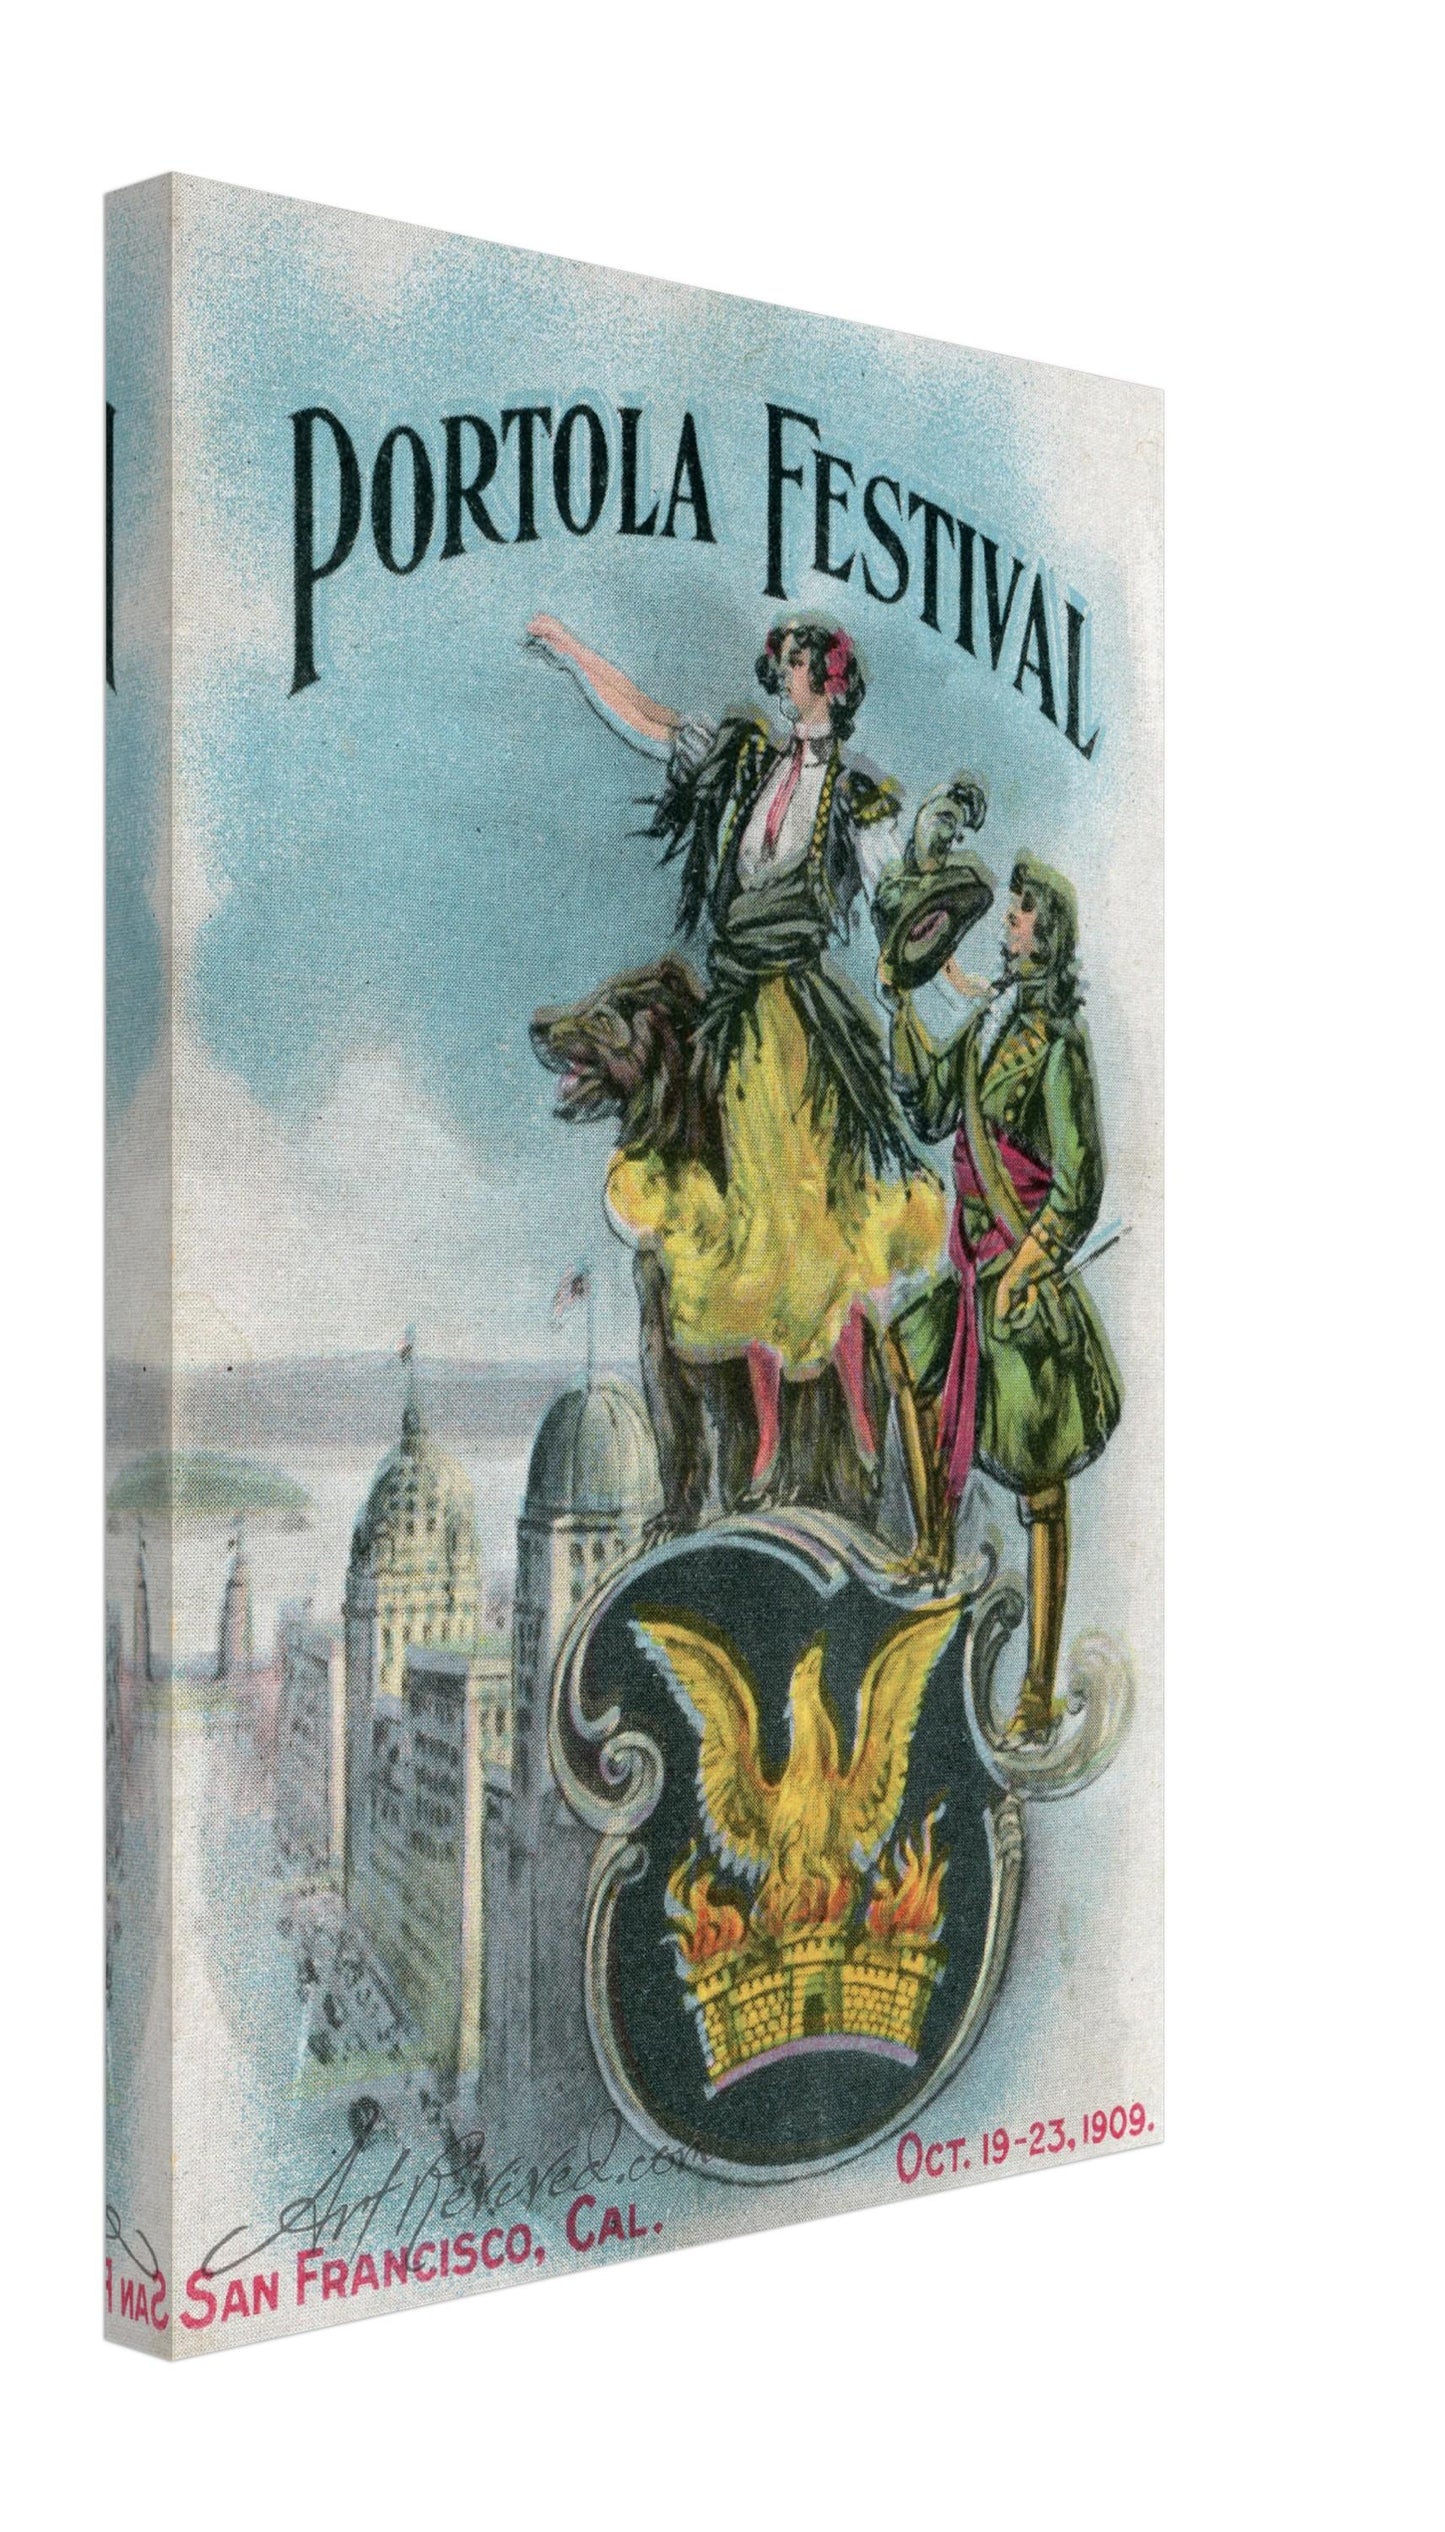 Portola Festival San Francisco Oct 1909